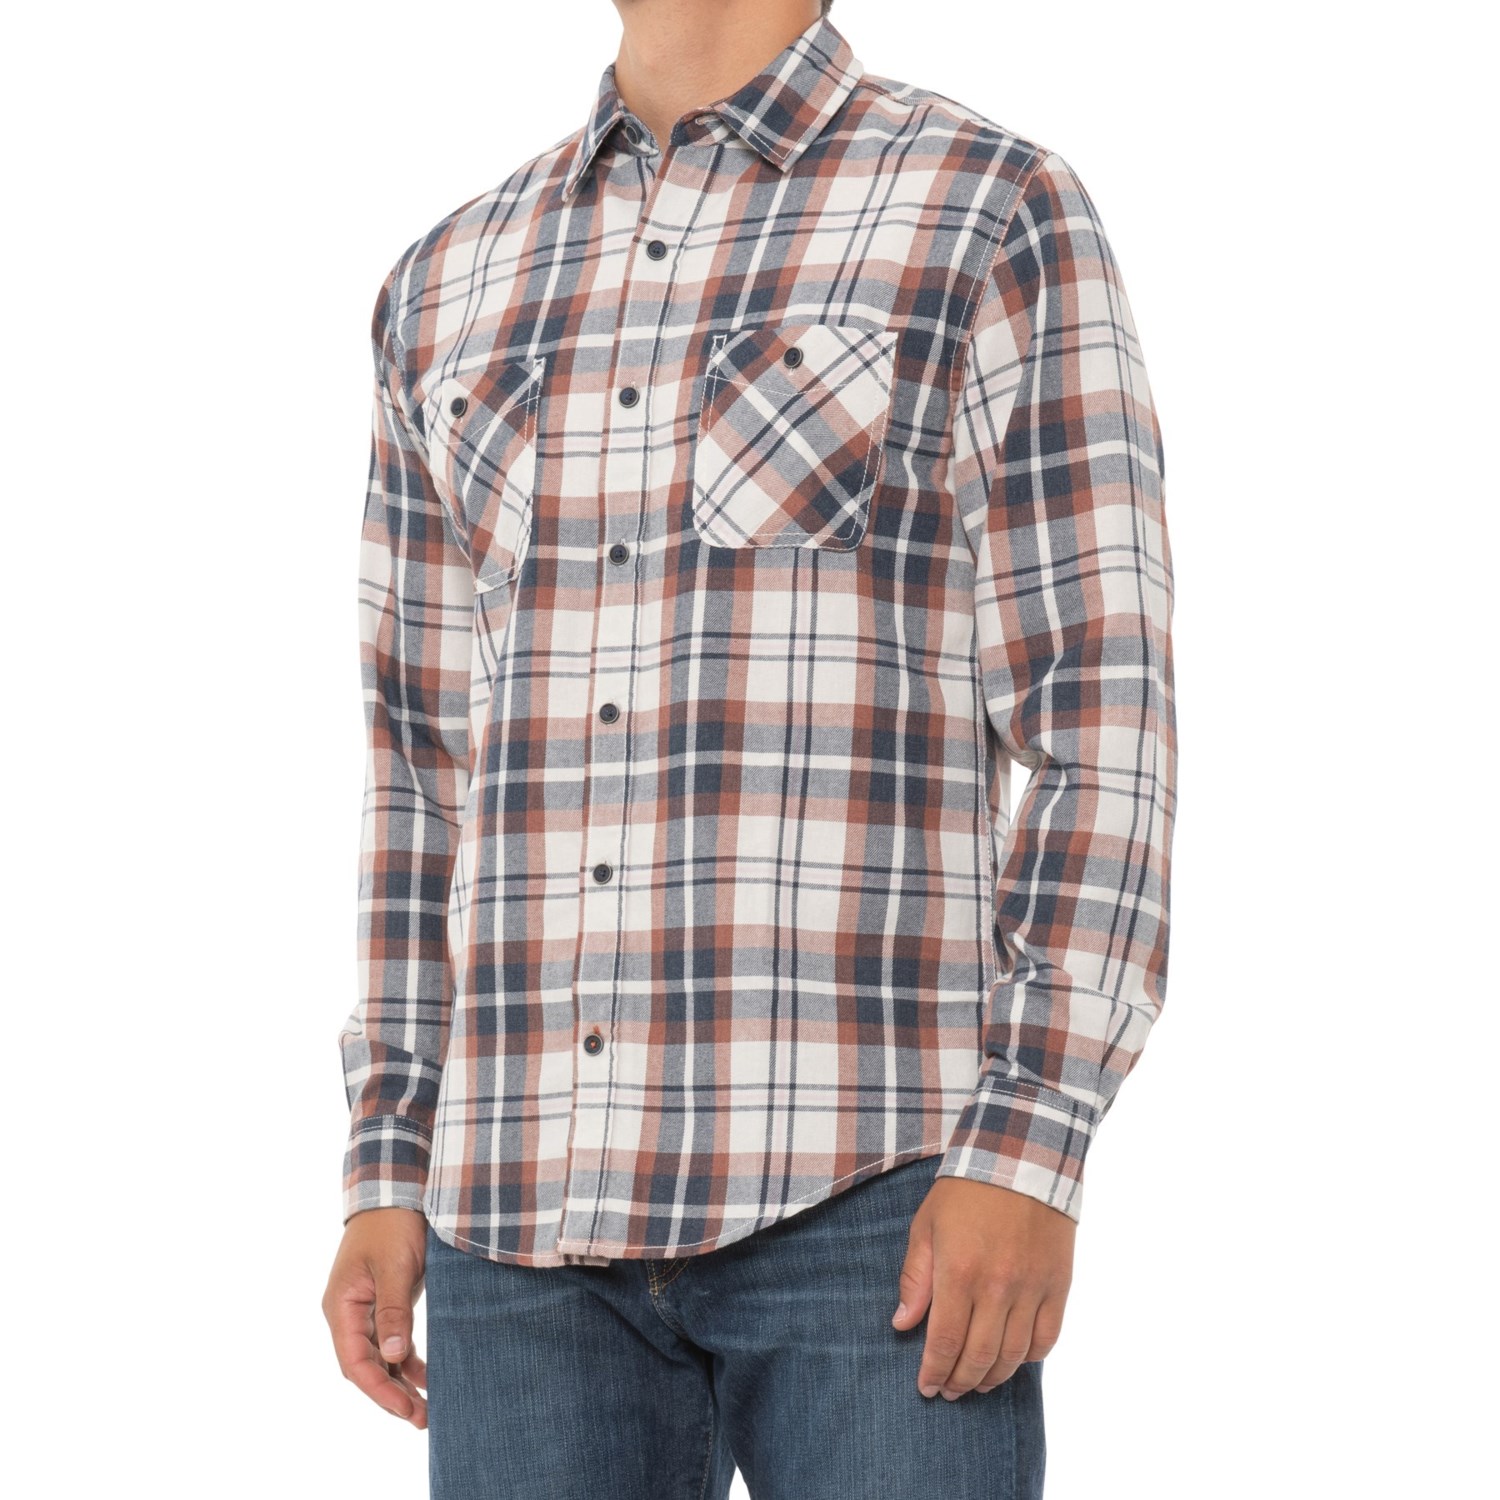 Weatherproof Vintage Burnout Plaid Flannel Shirt (For Men) - Save 56%